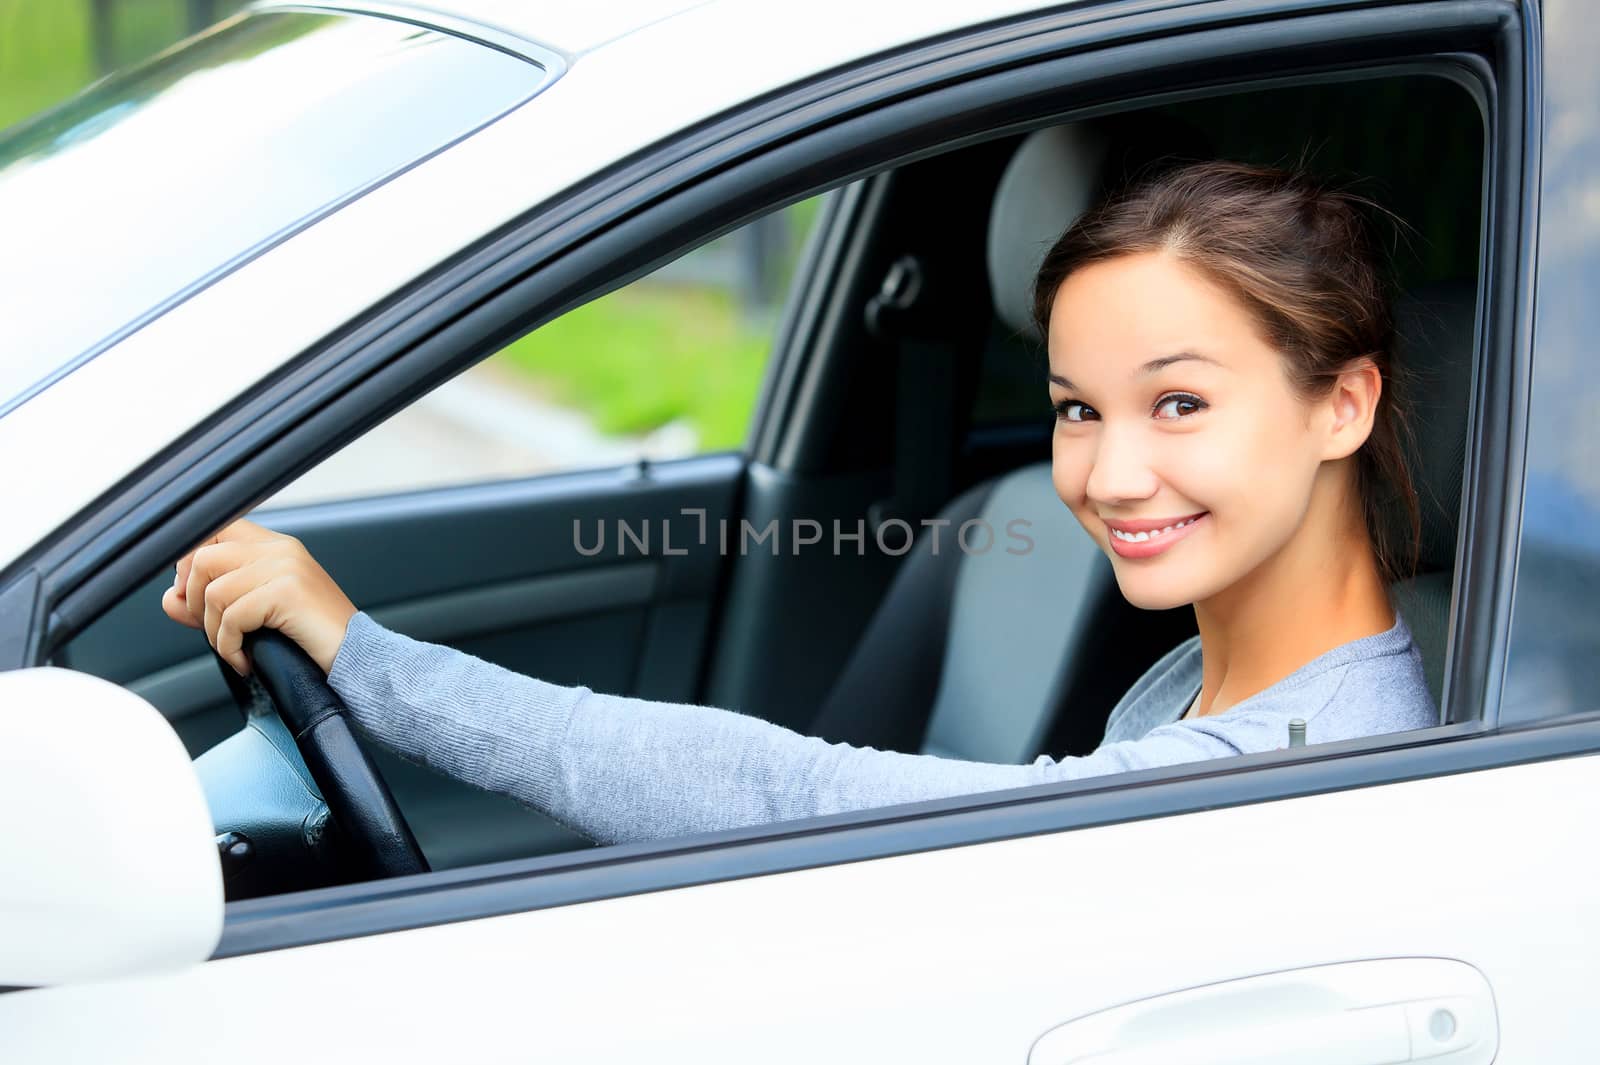 Cute girl in a car by Nobilior